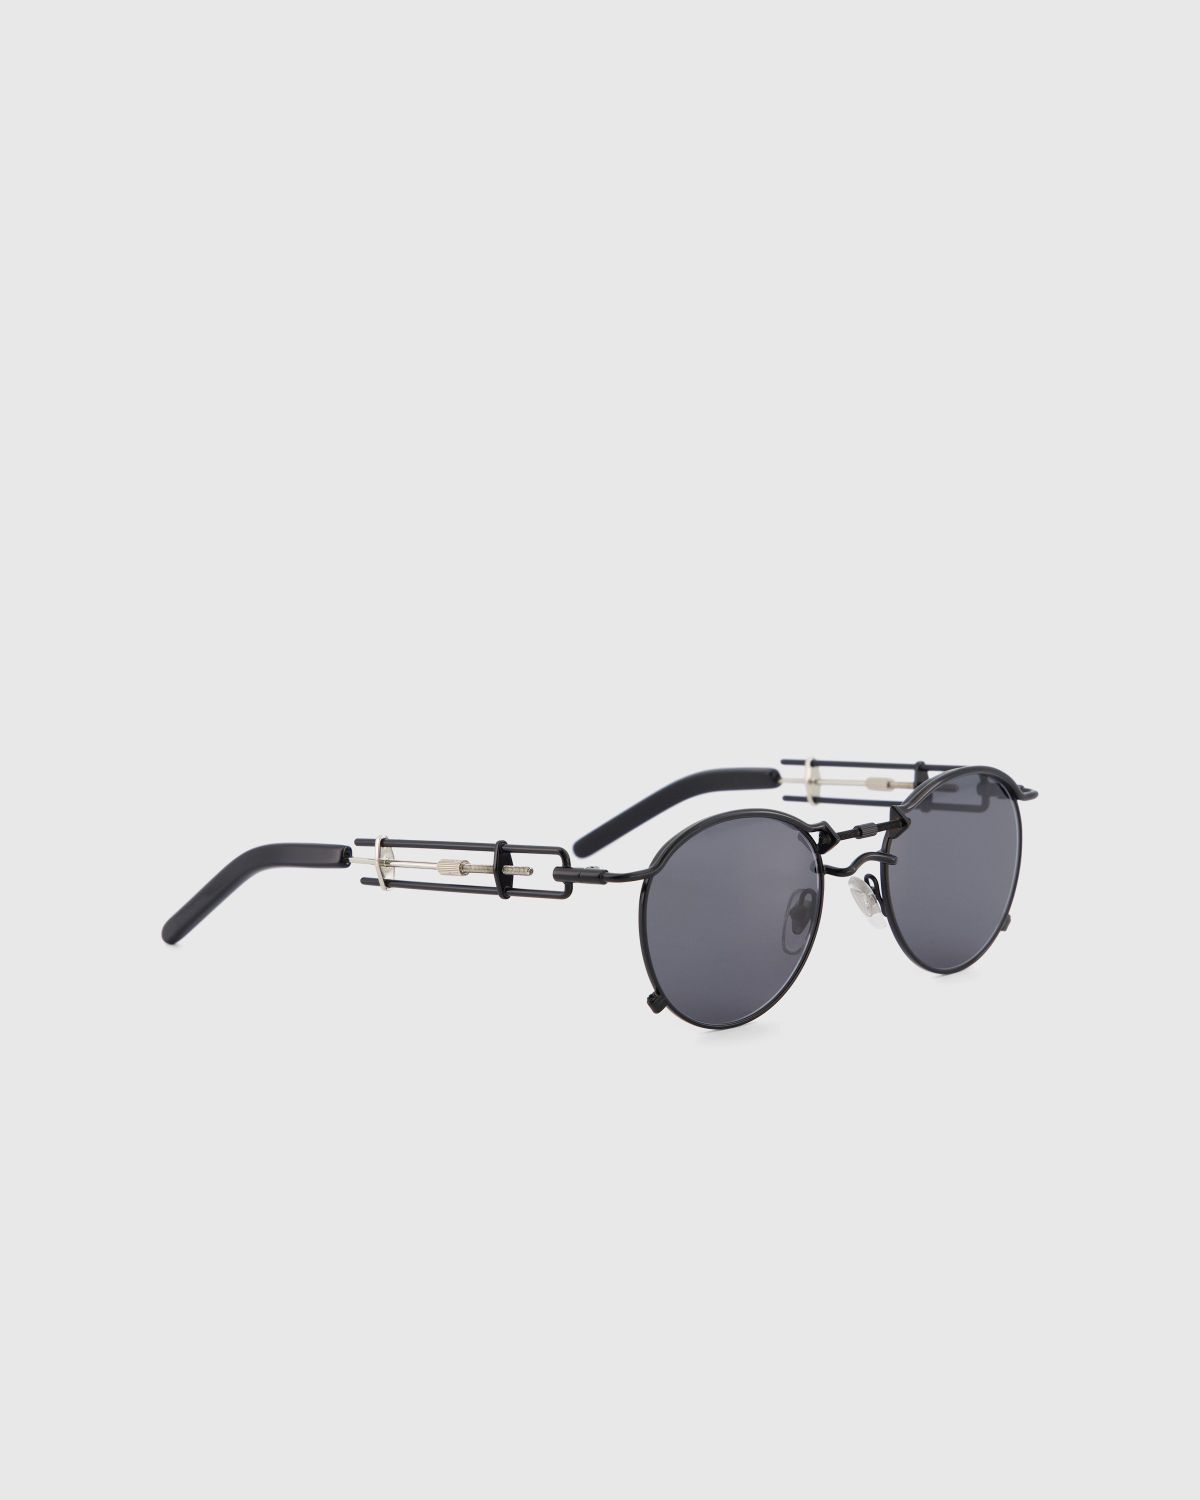 Jean Paul Gaultier x Burna Boy – 56-0174 Pas De Vis Sunglasses Black - Sunglasses - Black - Image 2